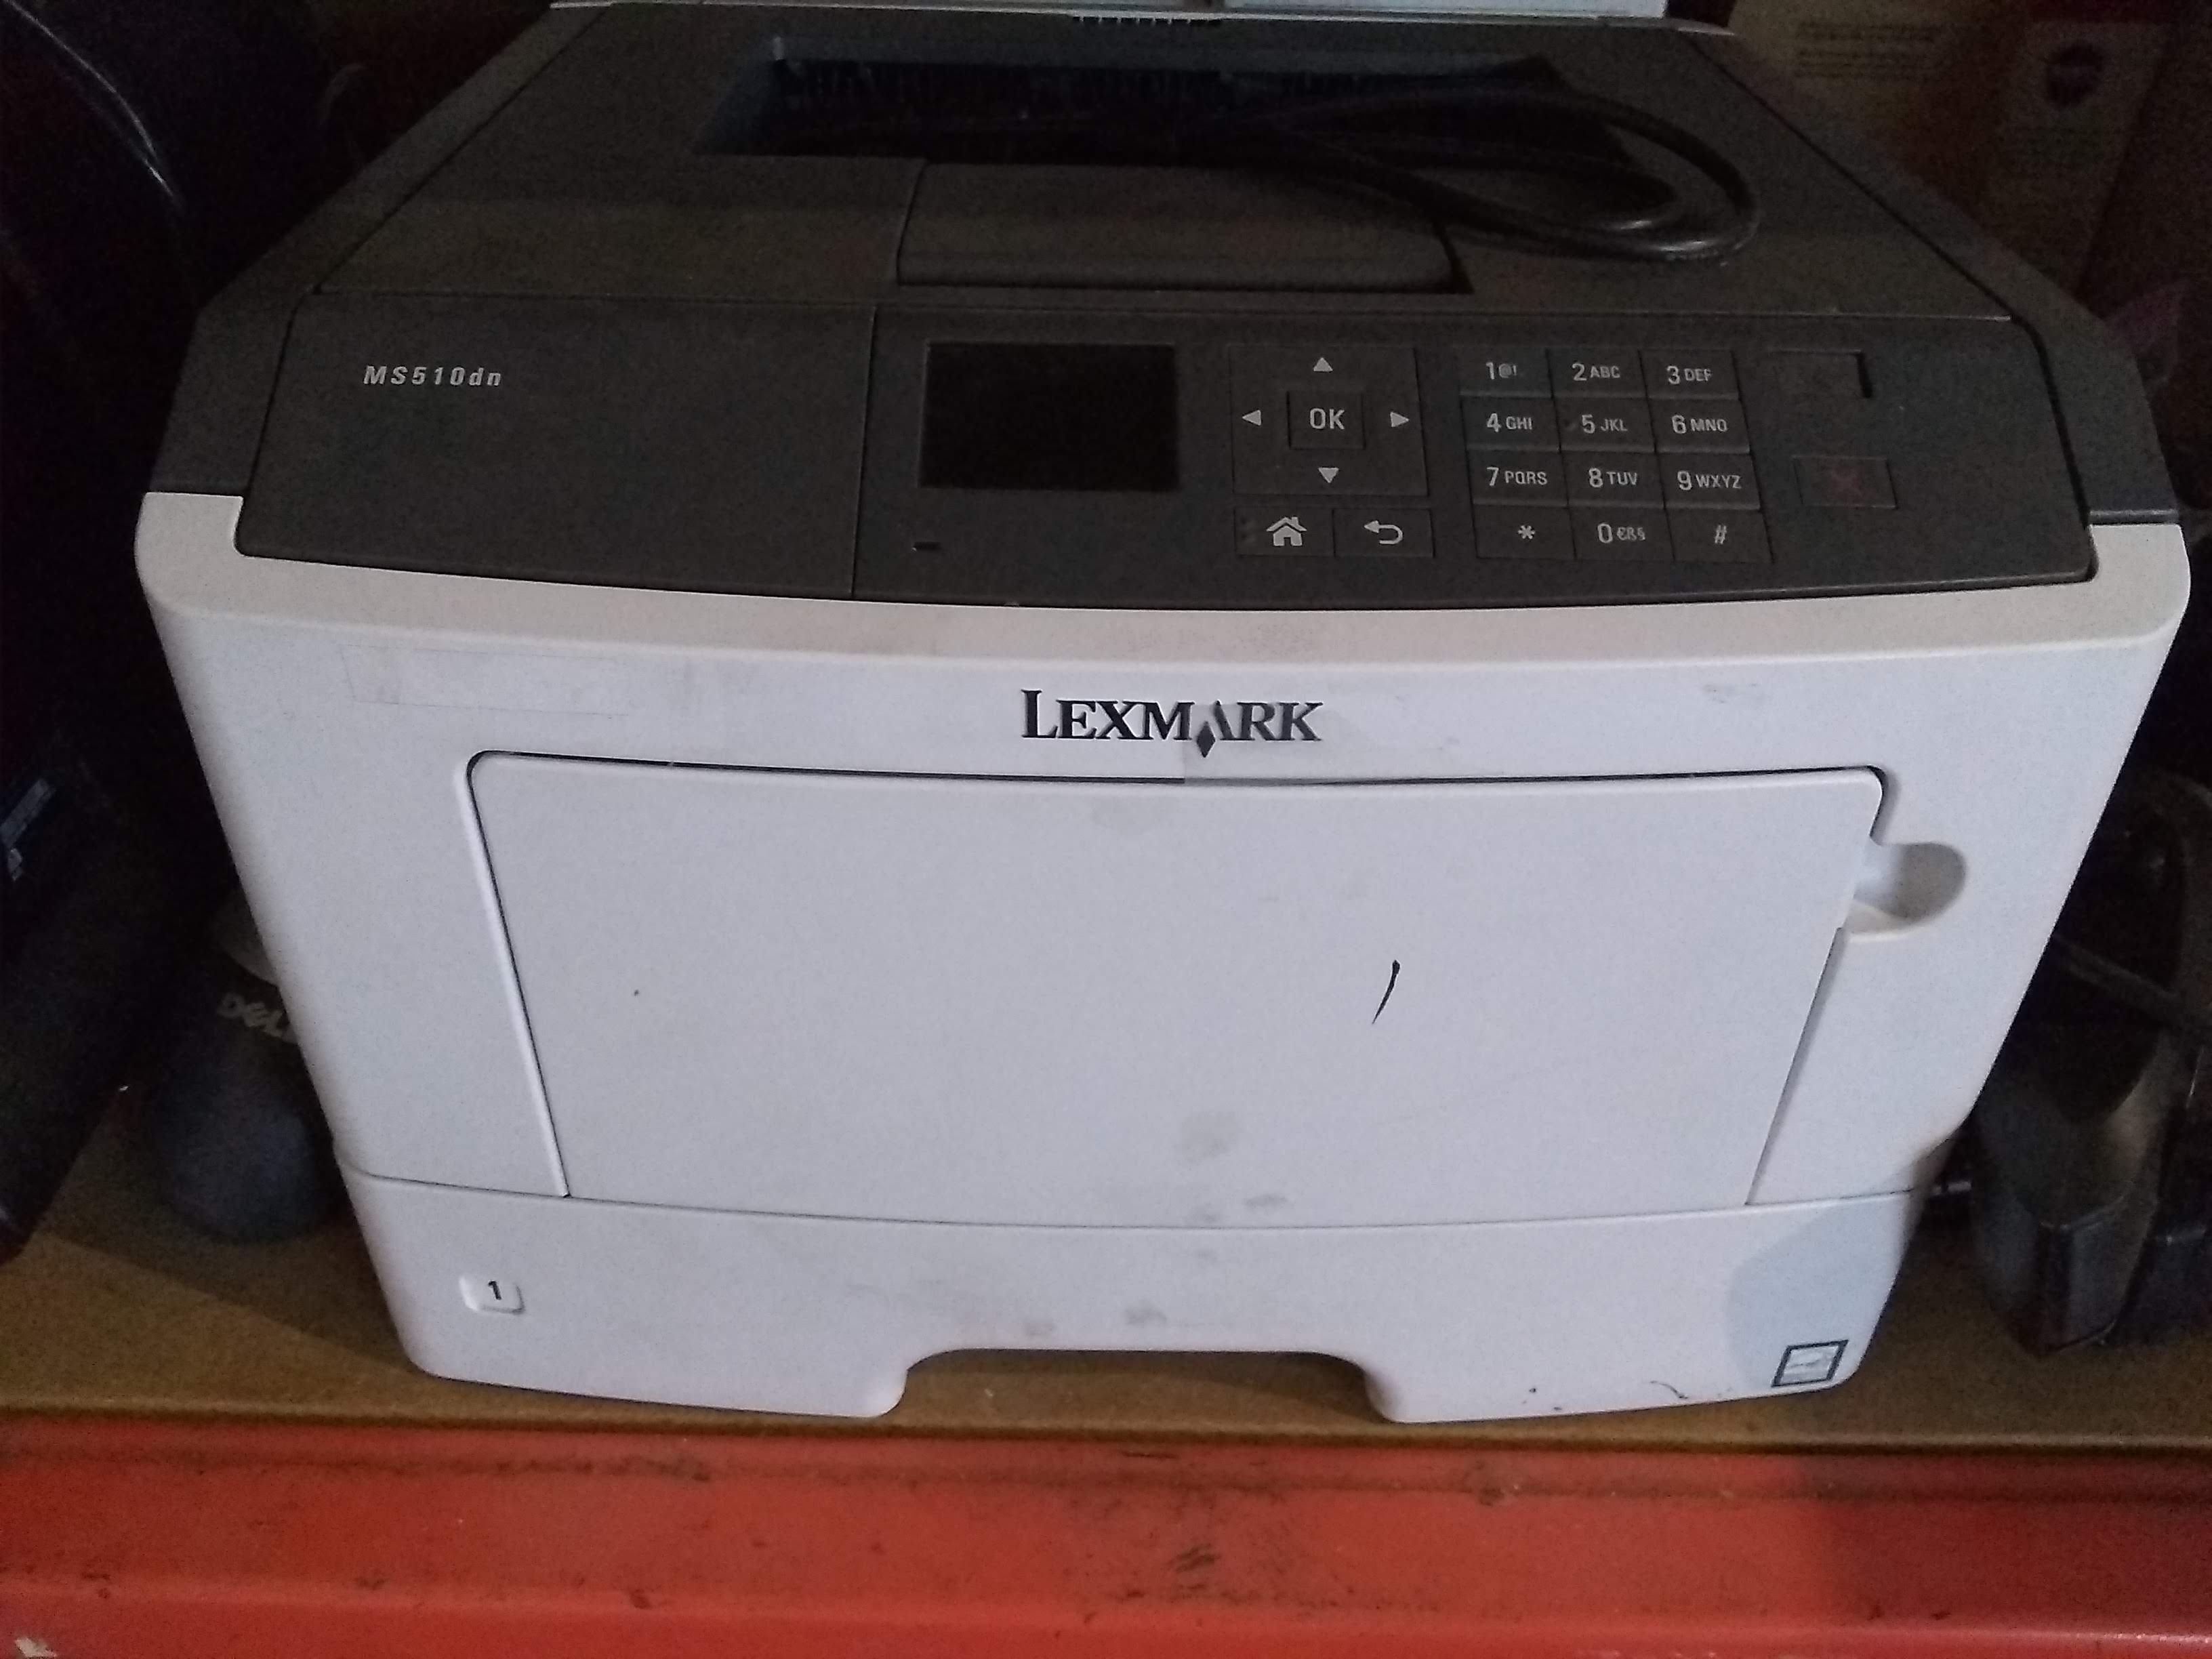 Printer, Lexmark